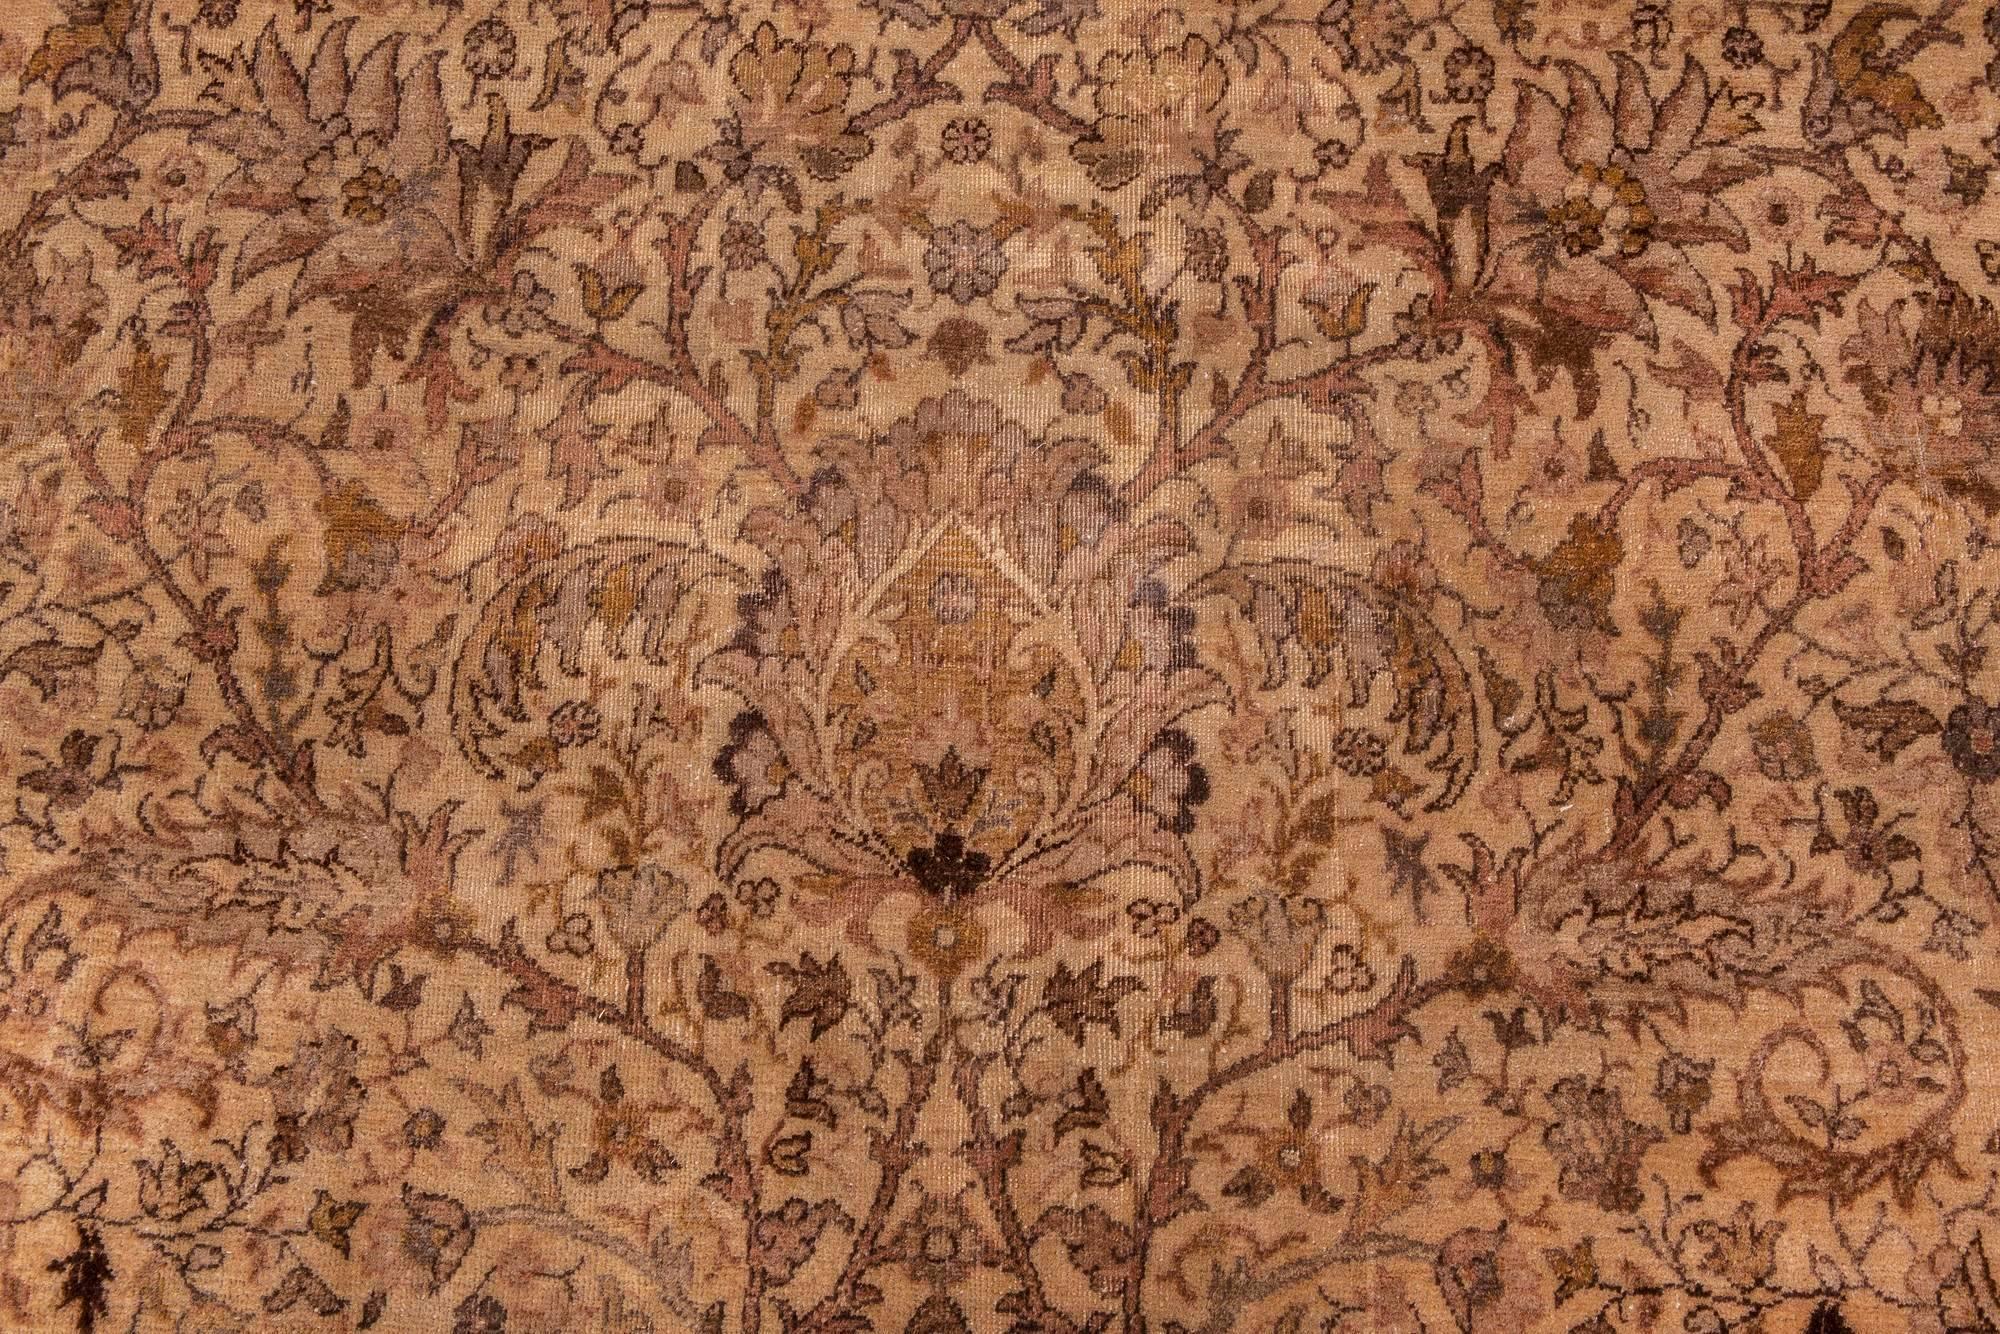 Antique Turkish Sivas Hand Knotted Wool Carpet
Size: 11'5